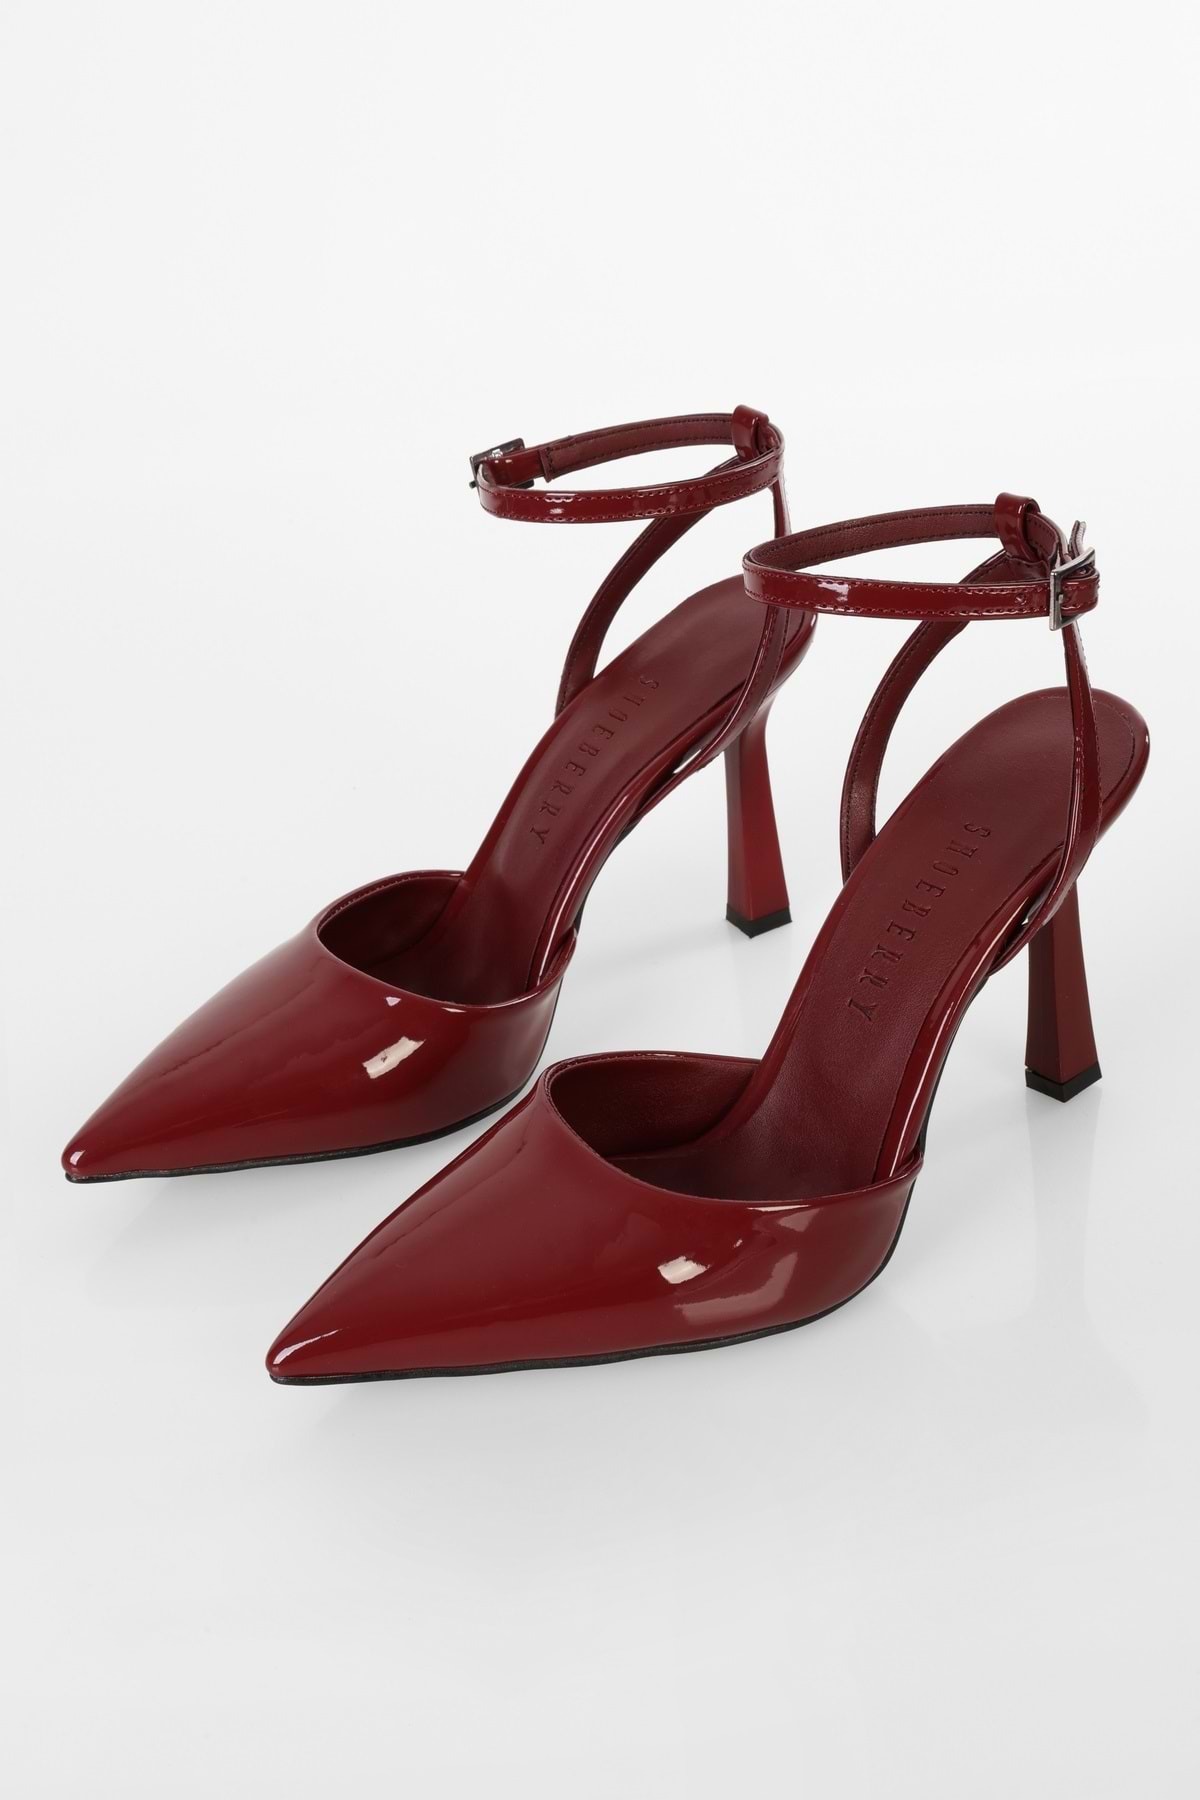 Levně Shoeberry Women's Martini Burgundy Patent Leather Belted Ankle Tied Stiletto